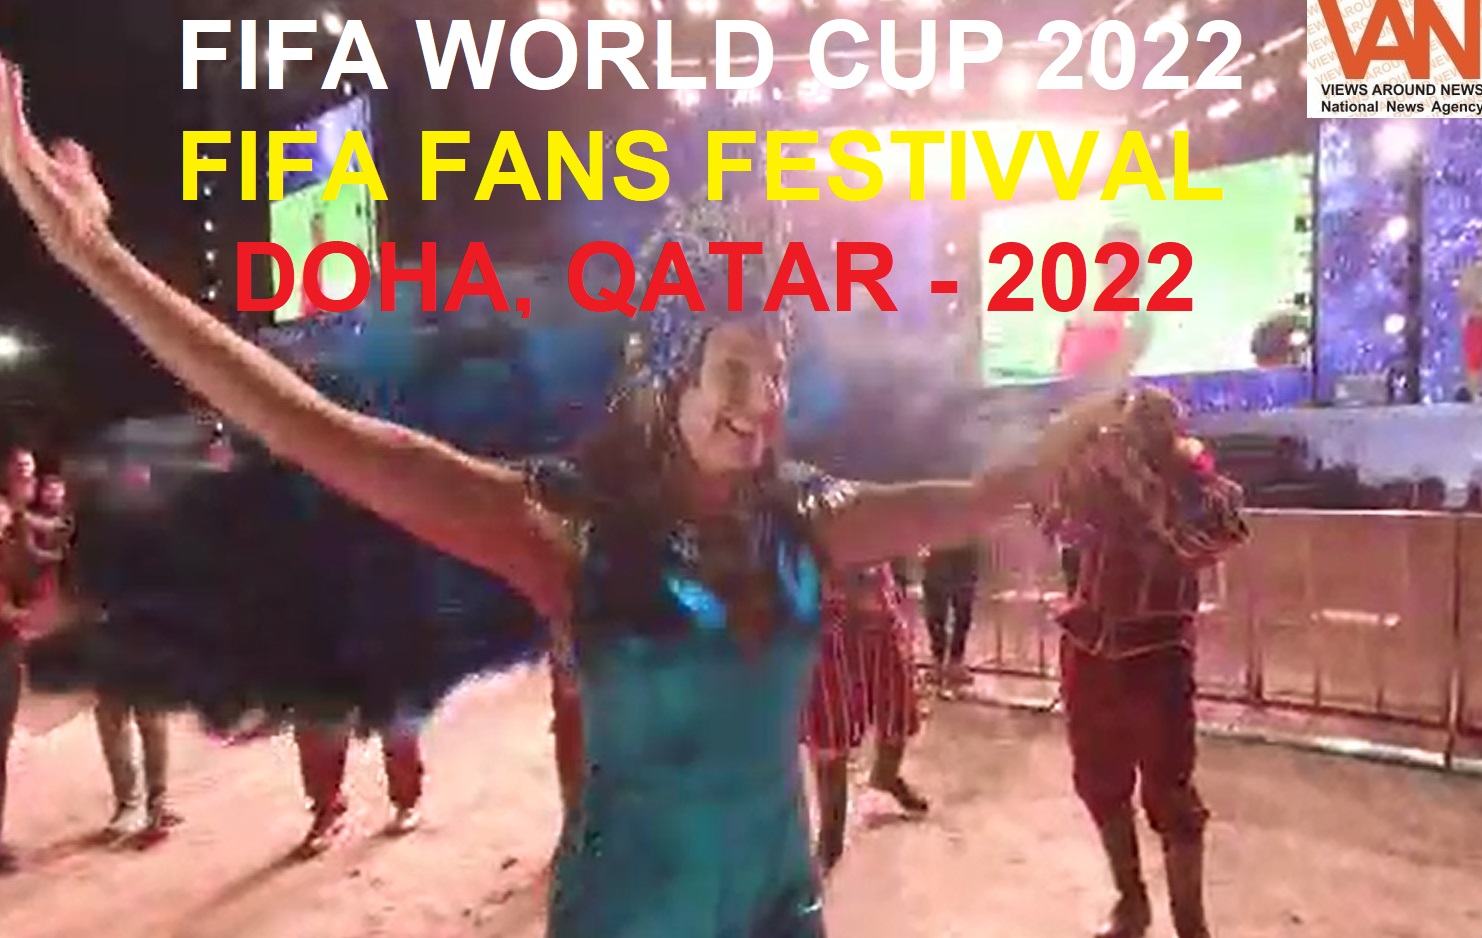 FIFA fans festival Doha, Qatar